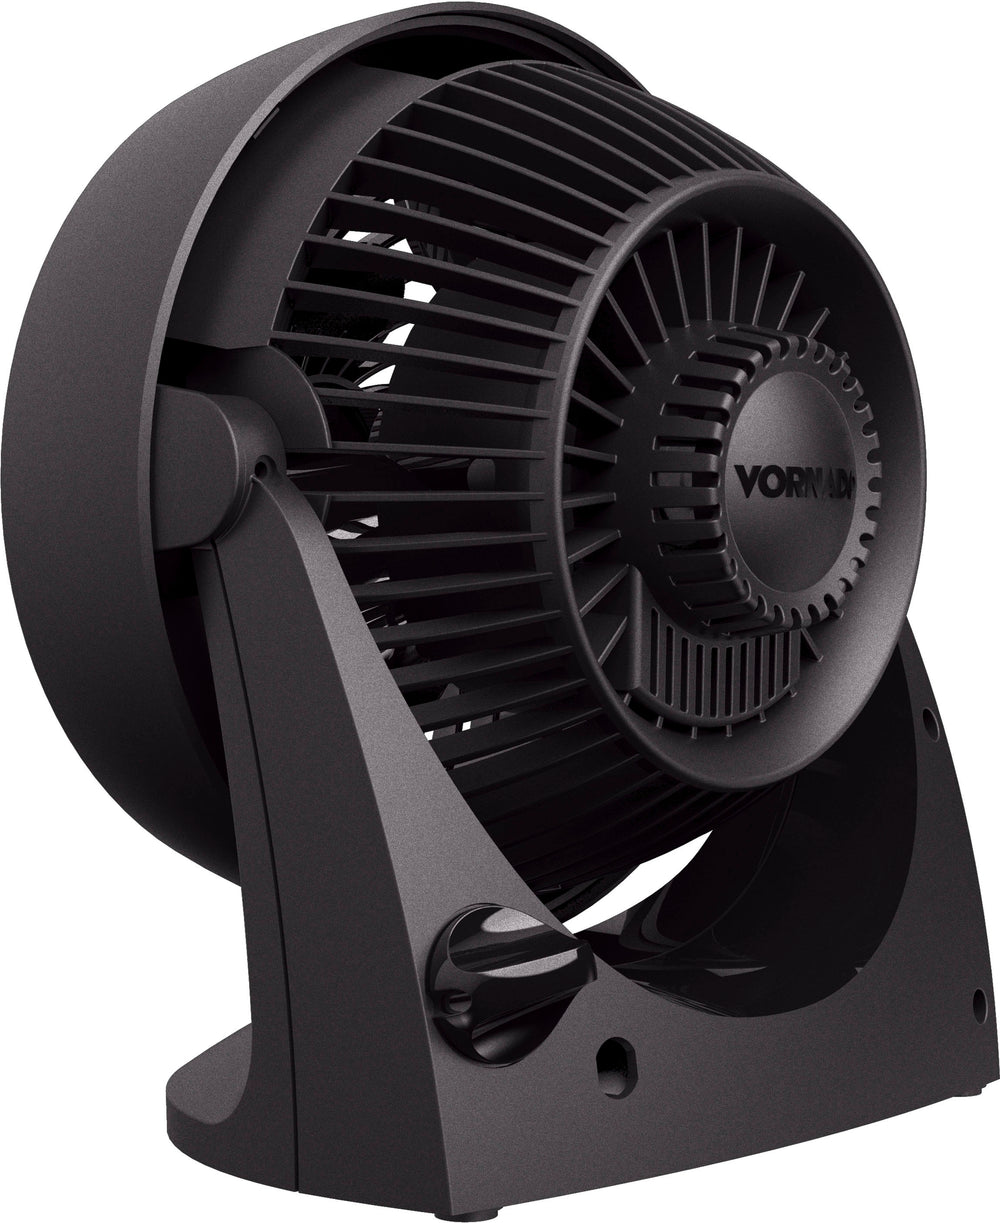 Vornado 533 Medium Air Circulator Fan - Black_1